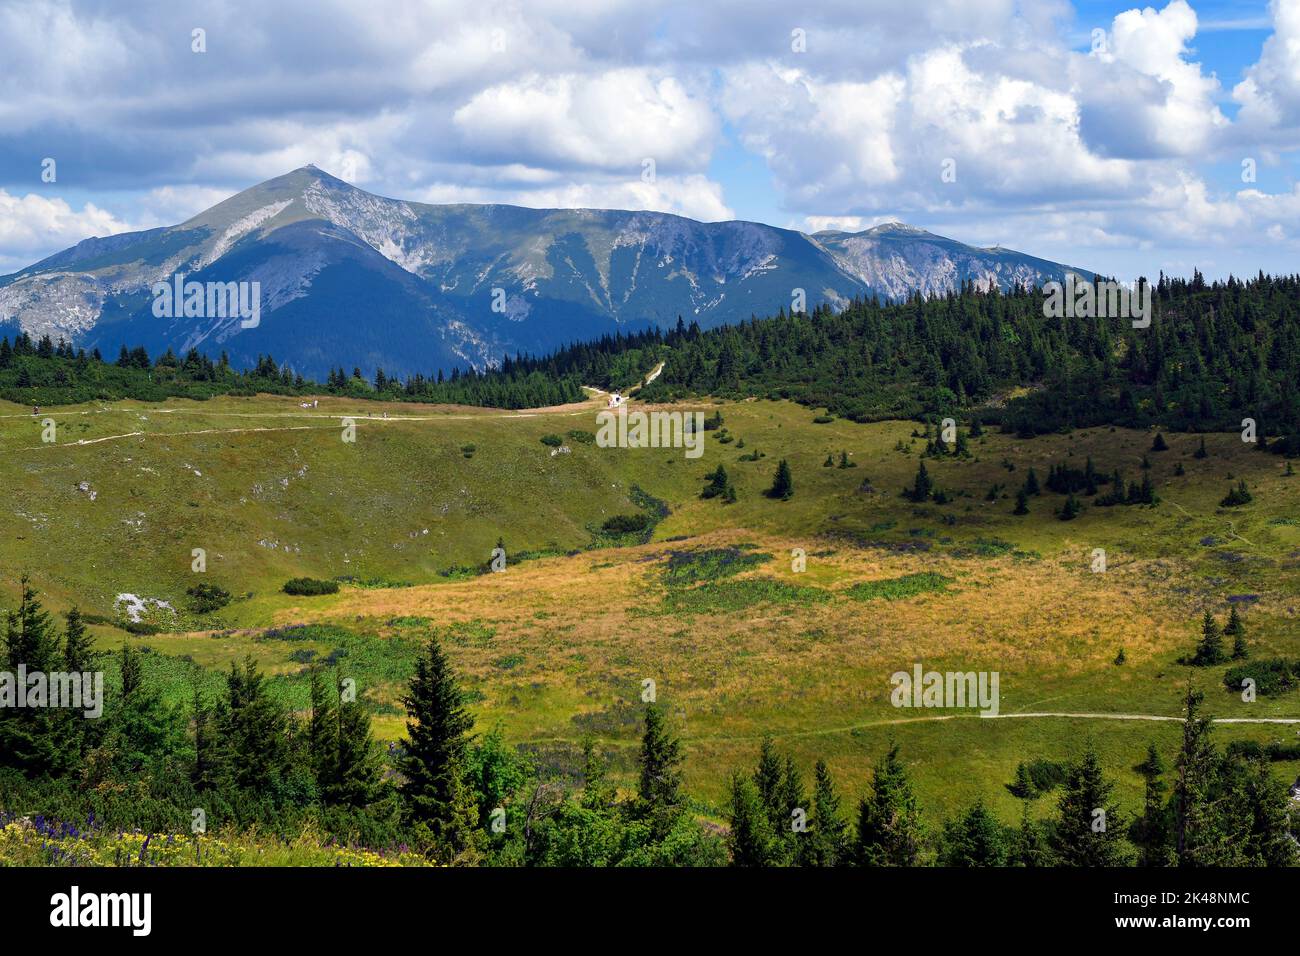 Austria, Rax mountain in Lower Austria with Schneeberg mountain behind, both part of Vienna Alps Stock Photo